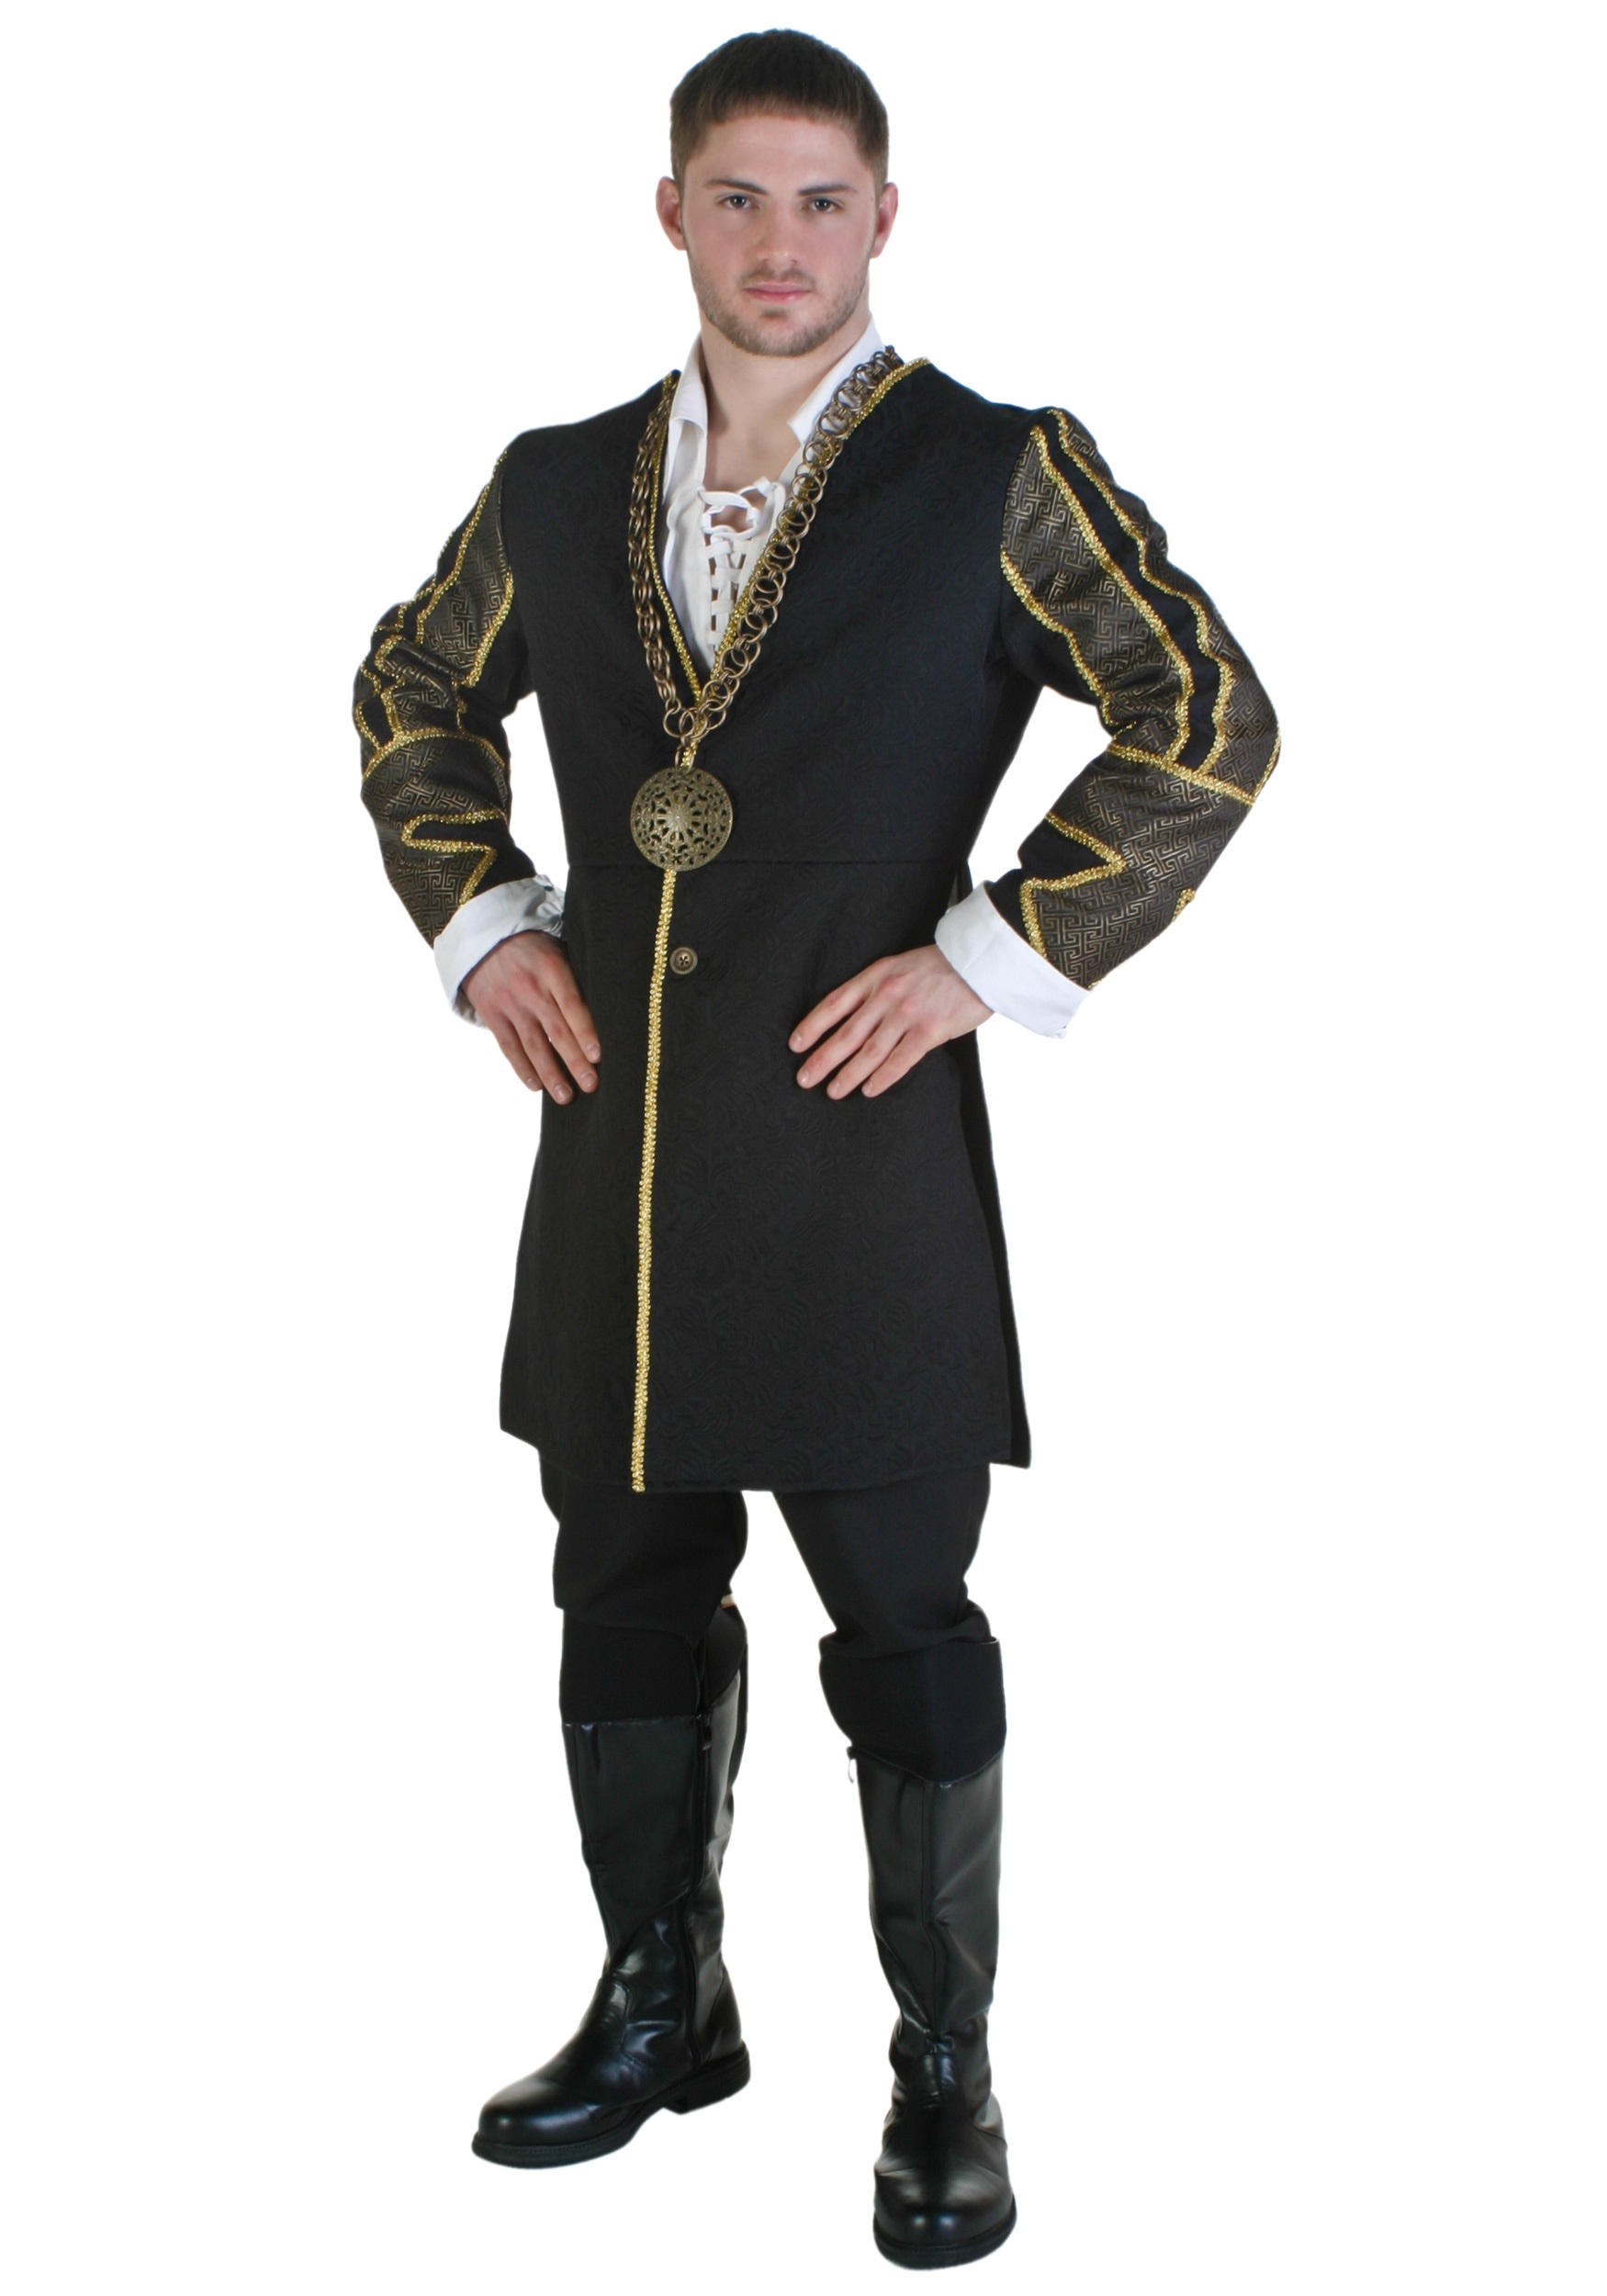 Photos - Fancy Dress Flama FUN Costumes King Henry VIII Royal Plus Size Men's Costume Black FUN2621PL 